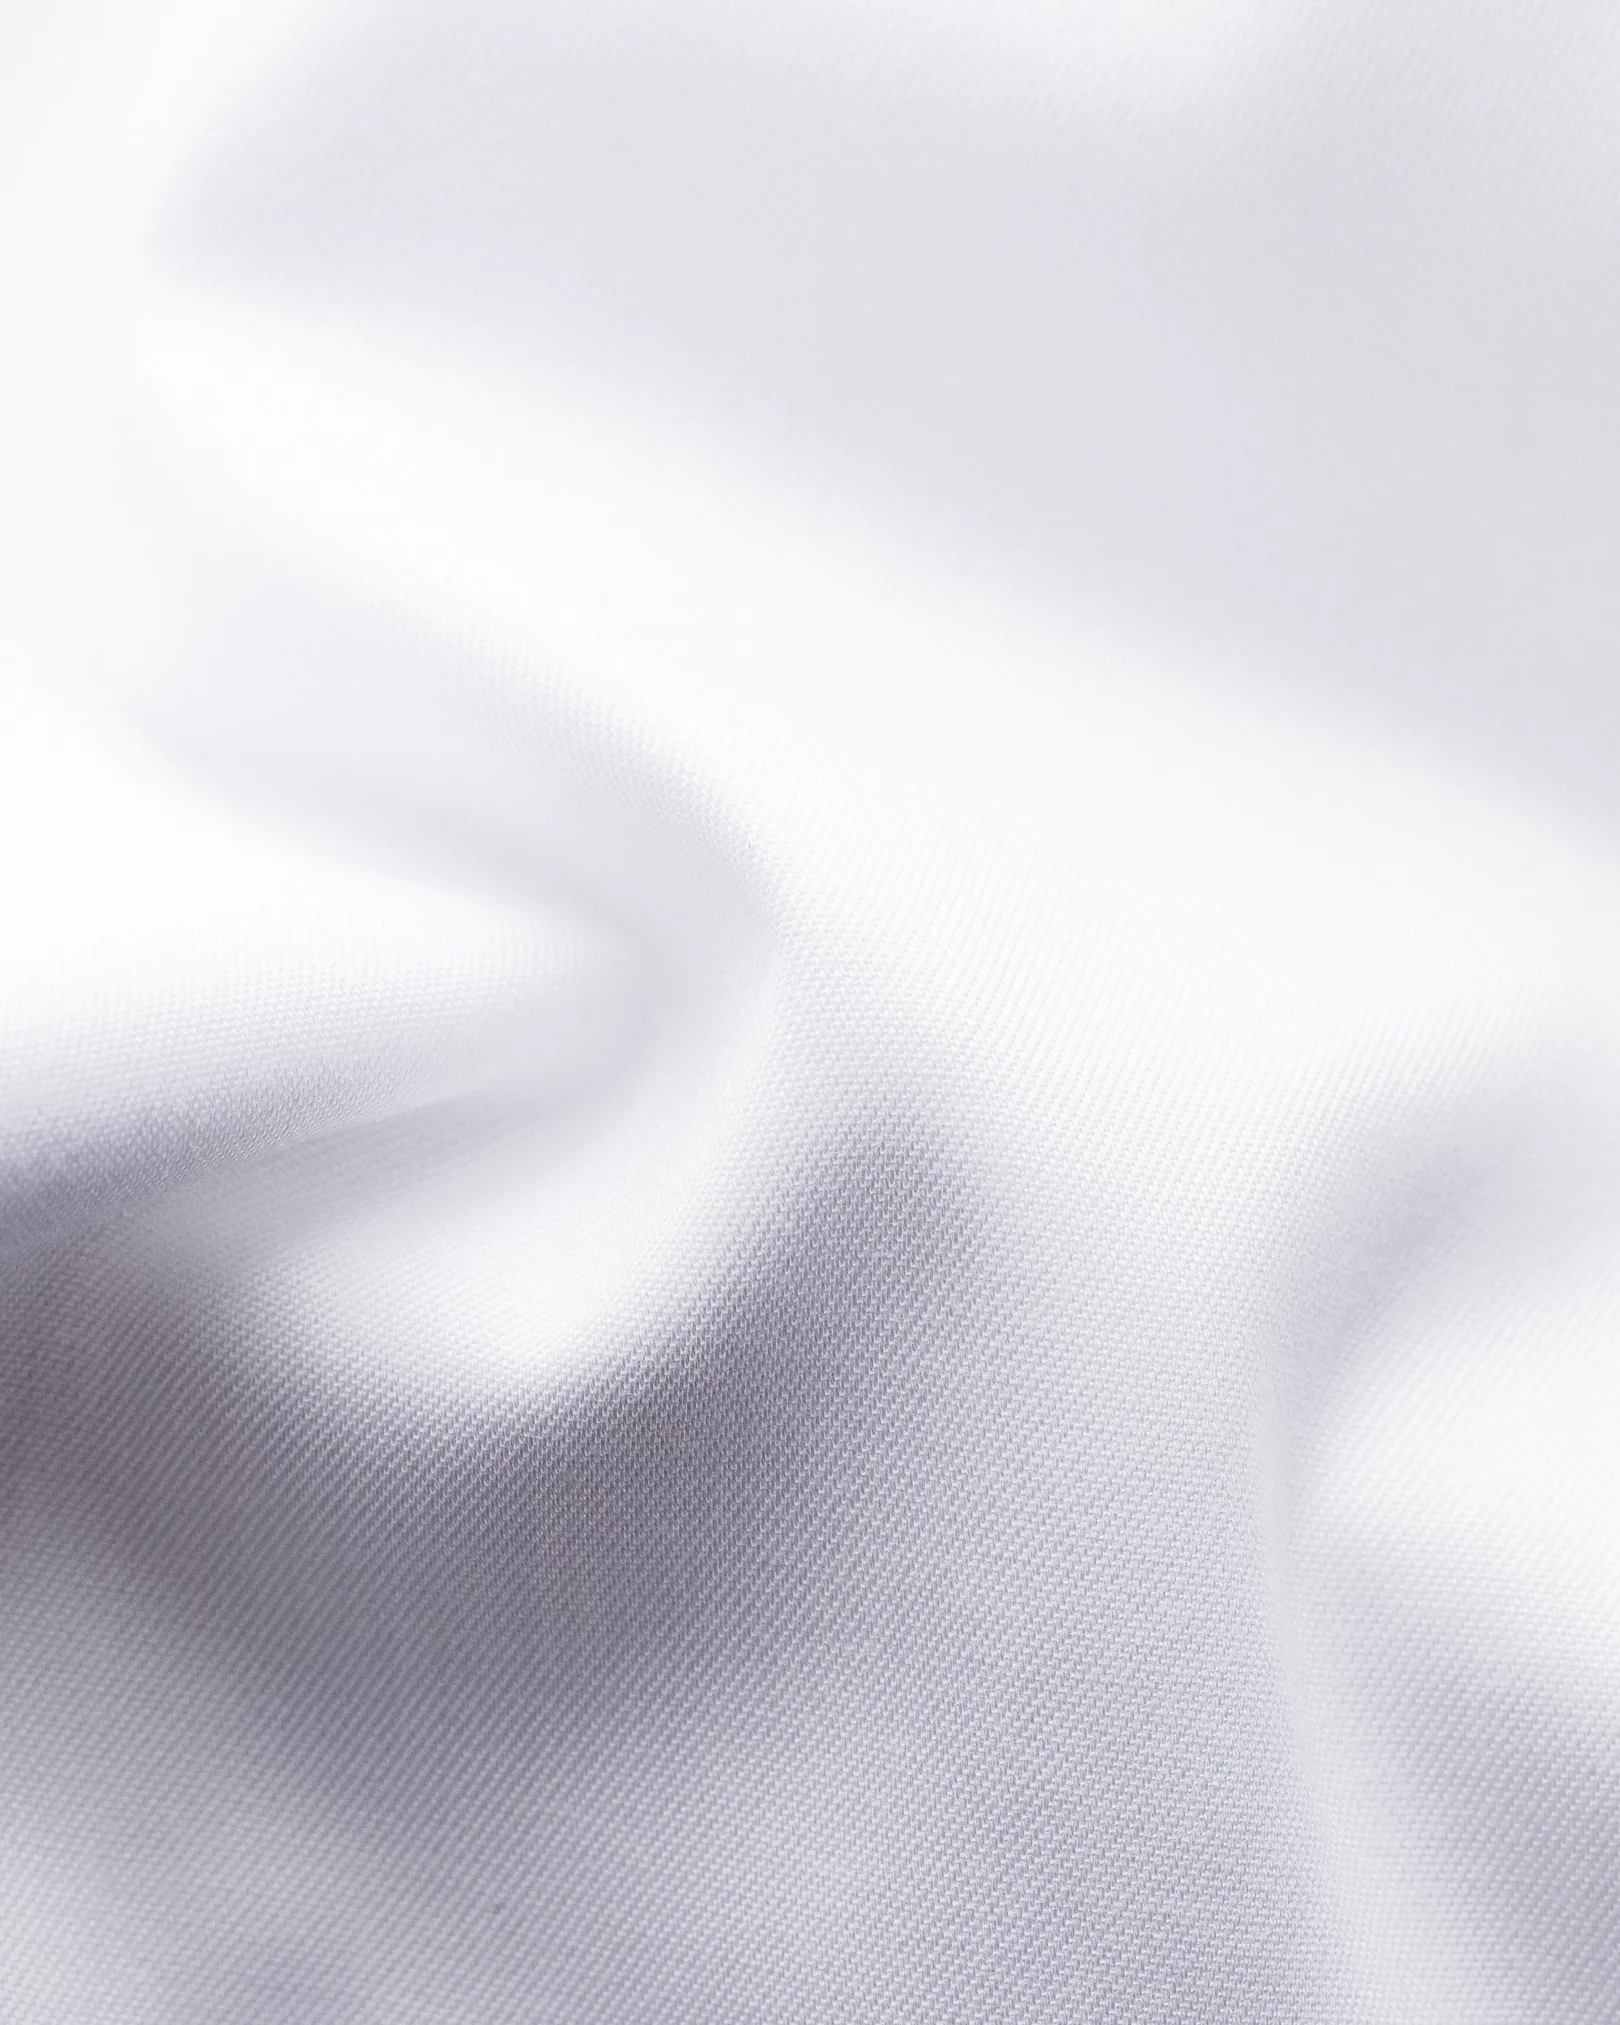 Eton - white signature twill details shirt